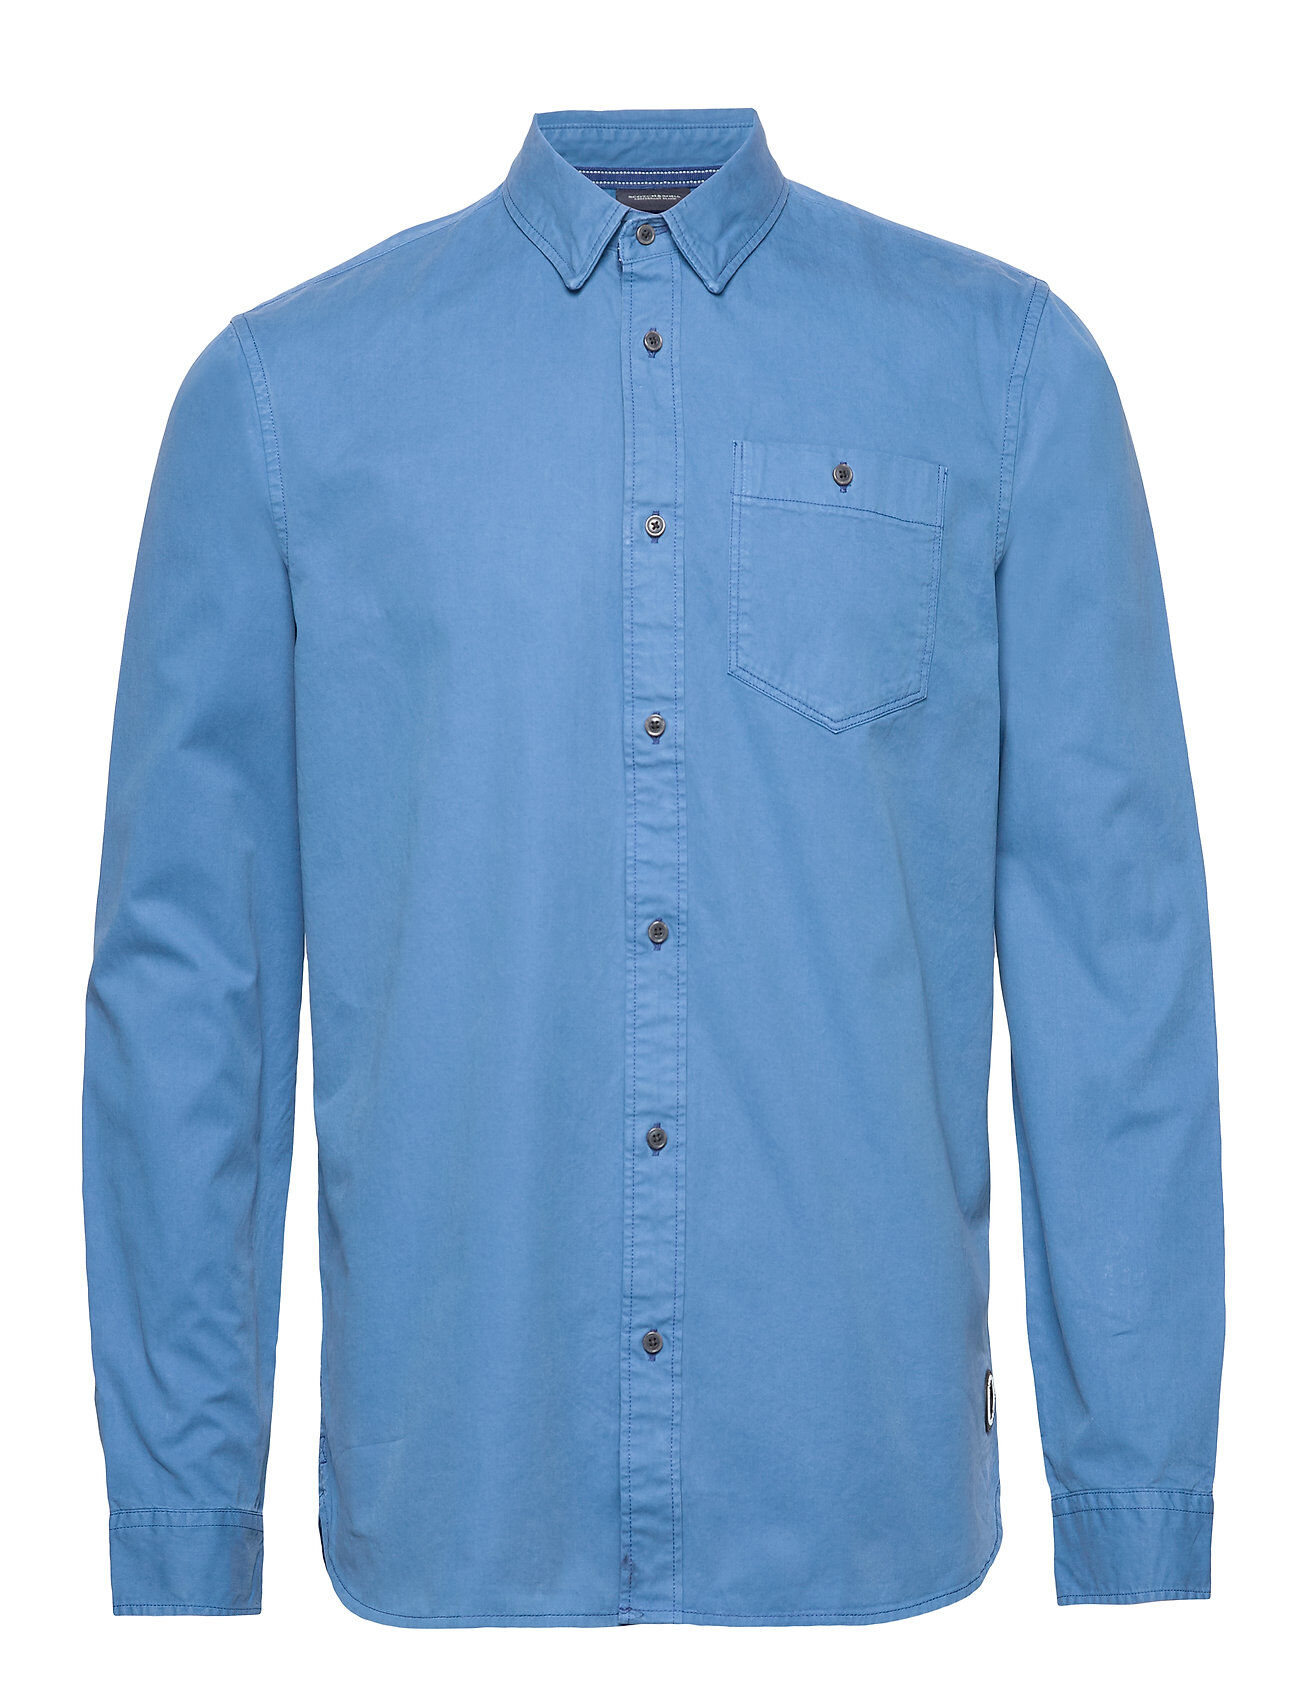 Scotch & Soda Ams Blauw Garment Dyed Shirt With Suble Washes Skjorte Uformell Blå Scotch & Soda